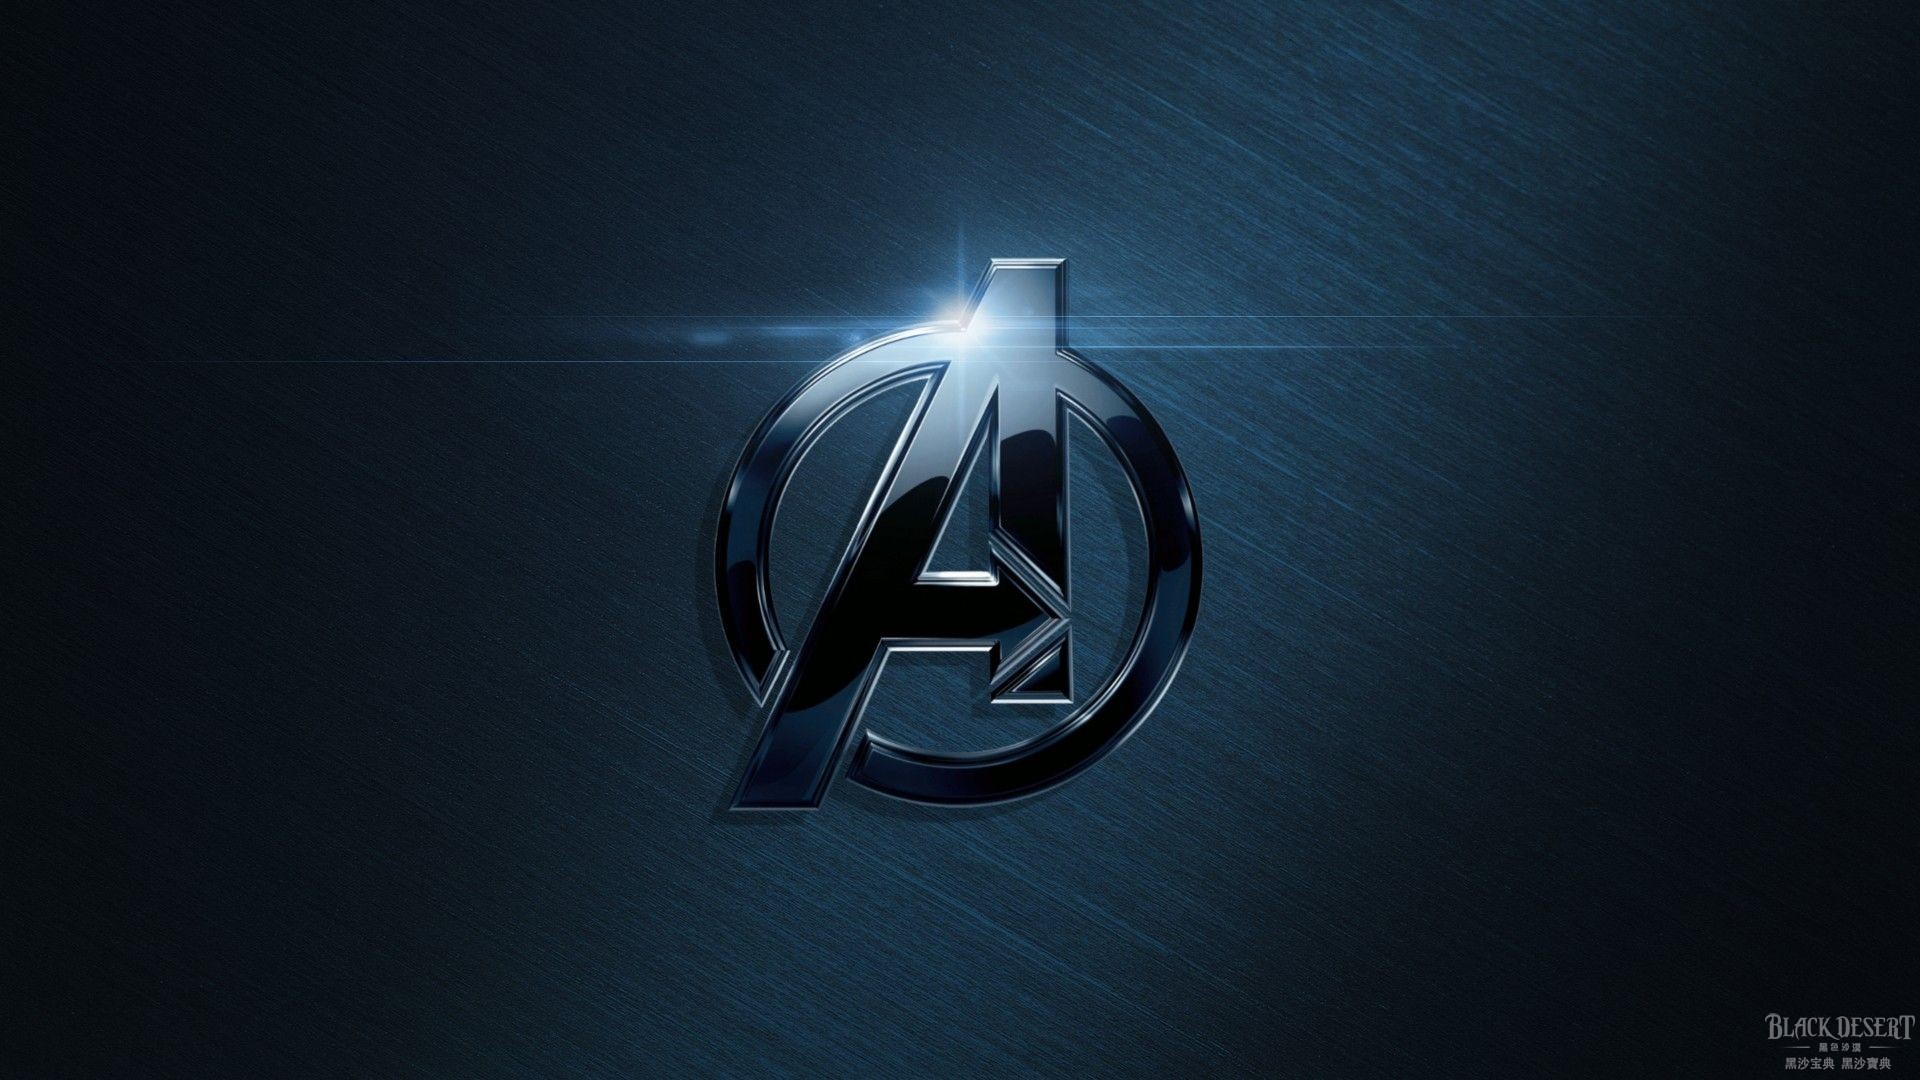 Movie-the-avengers-logo-hd-free-336570.jpg